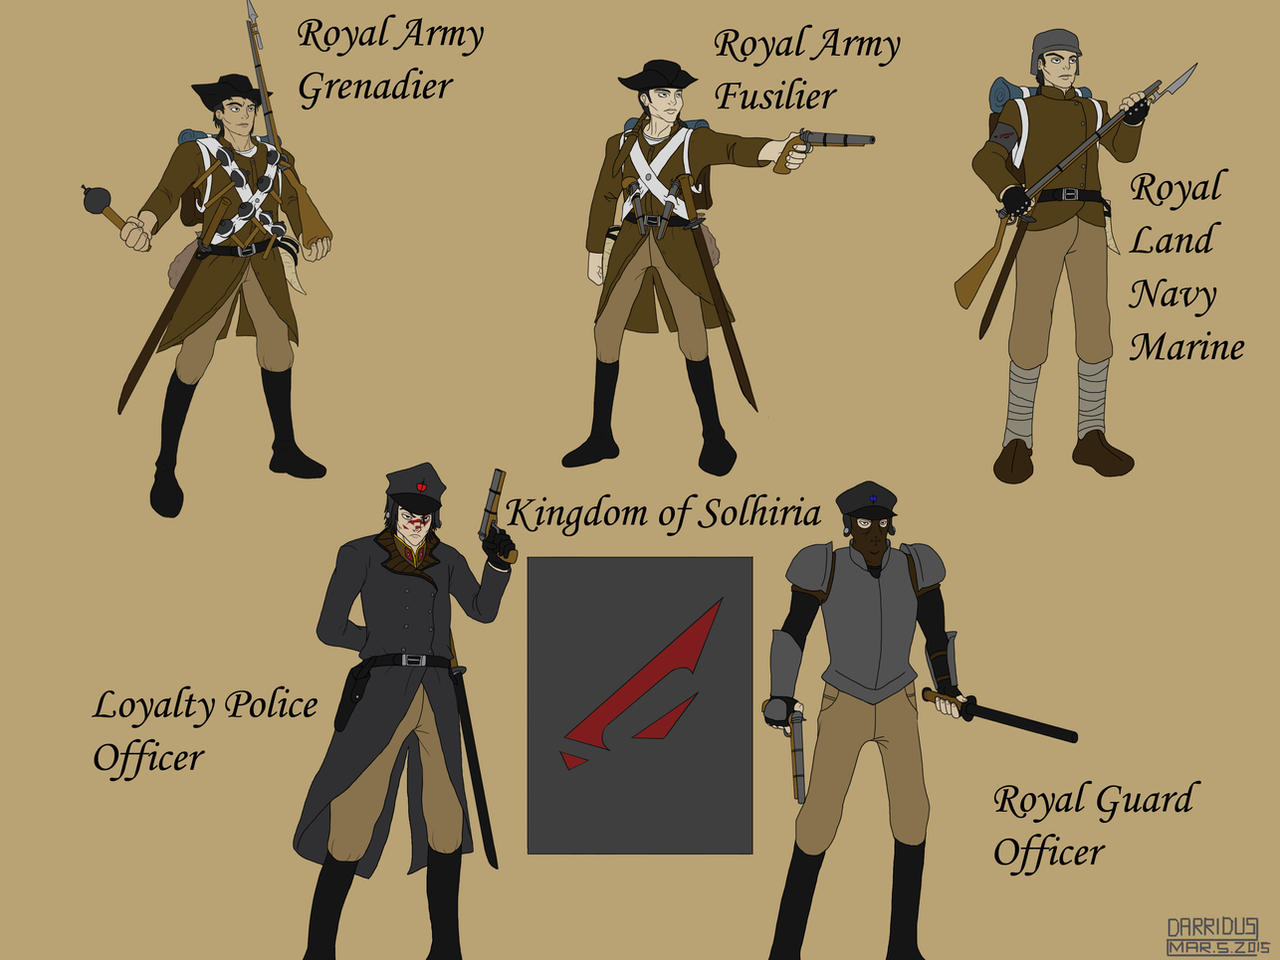 Royal Soldier (overview) by wordlbuilder99 on DeviantArt